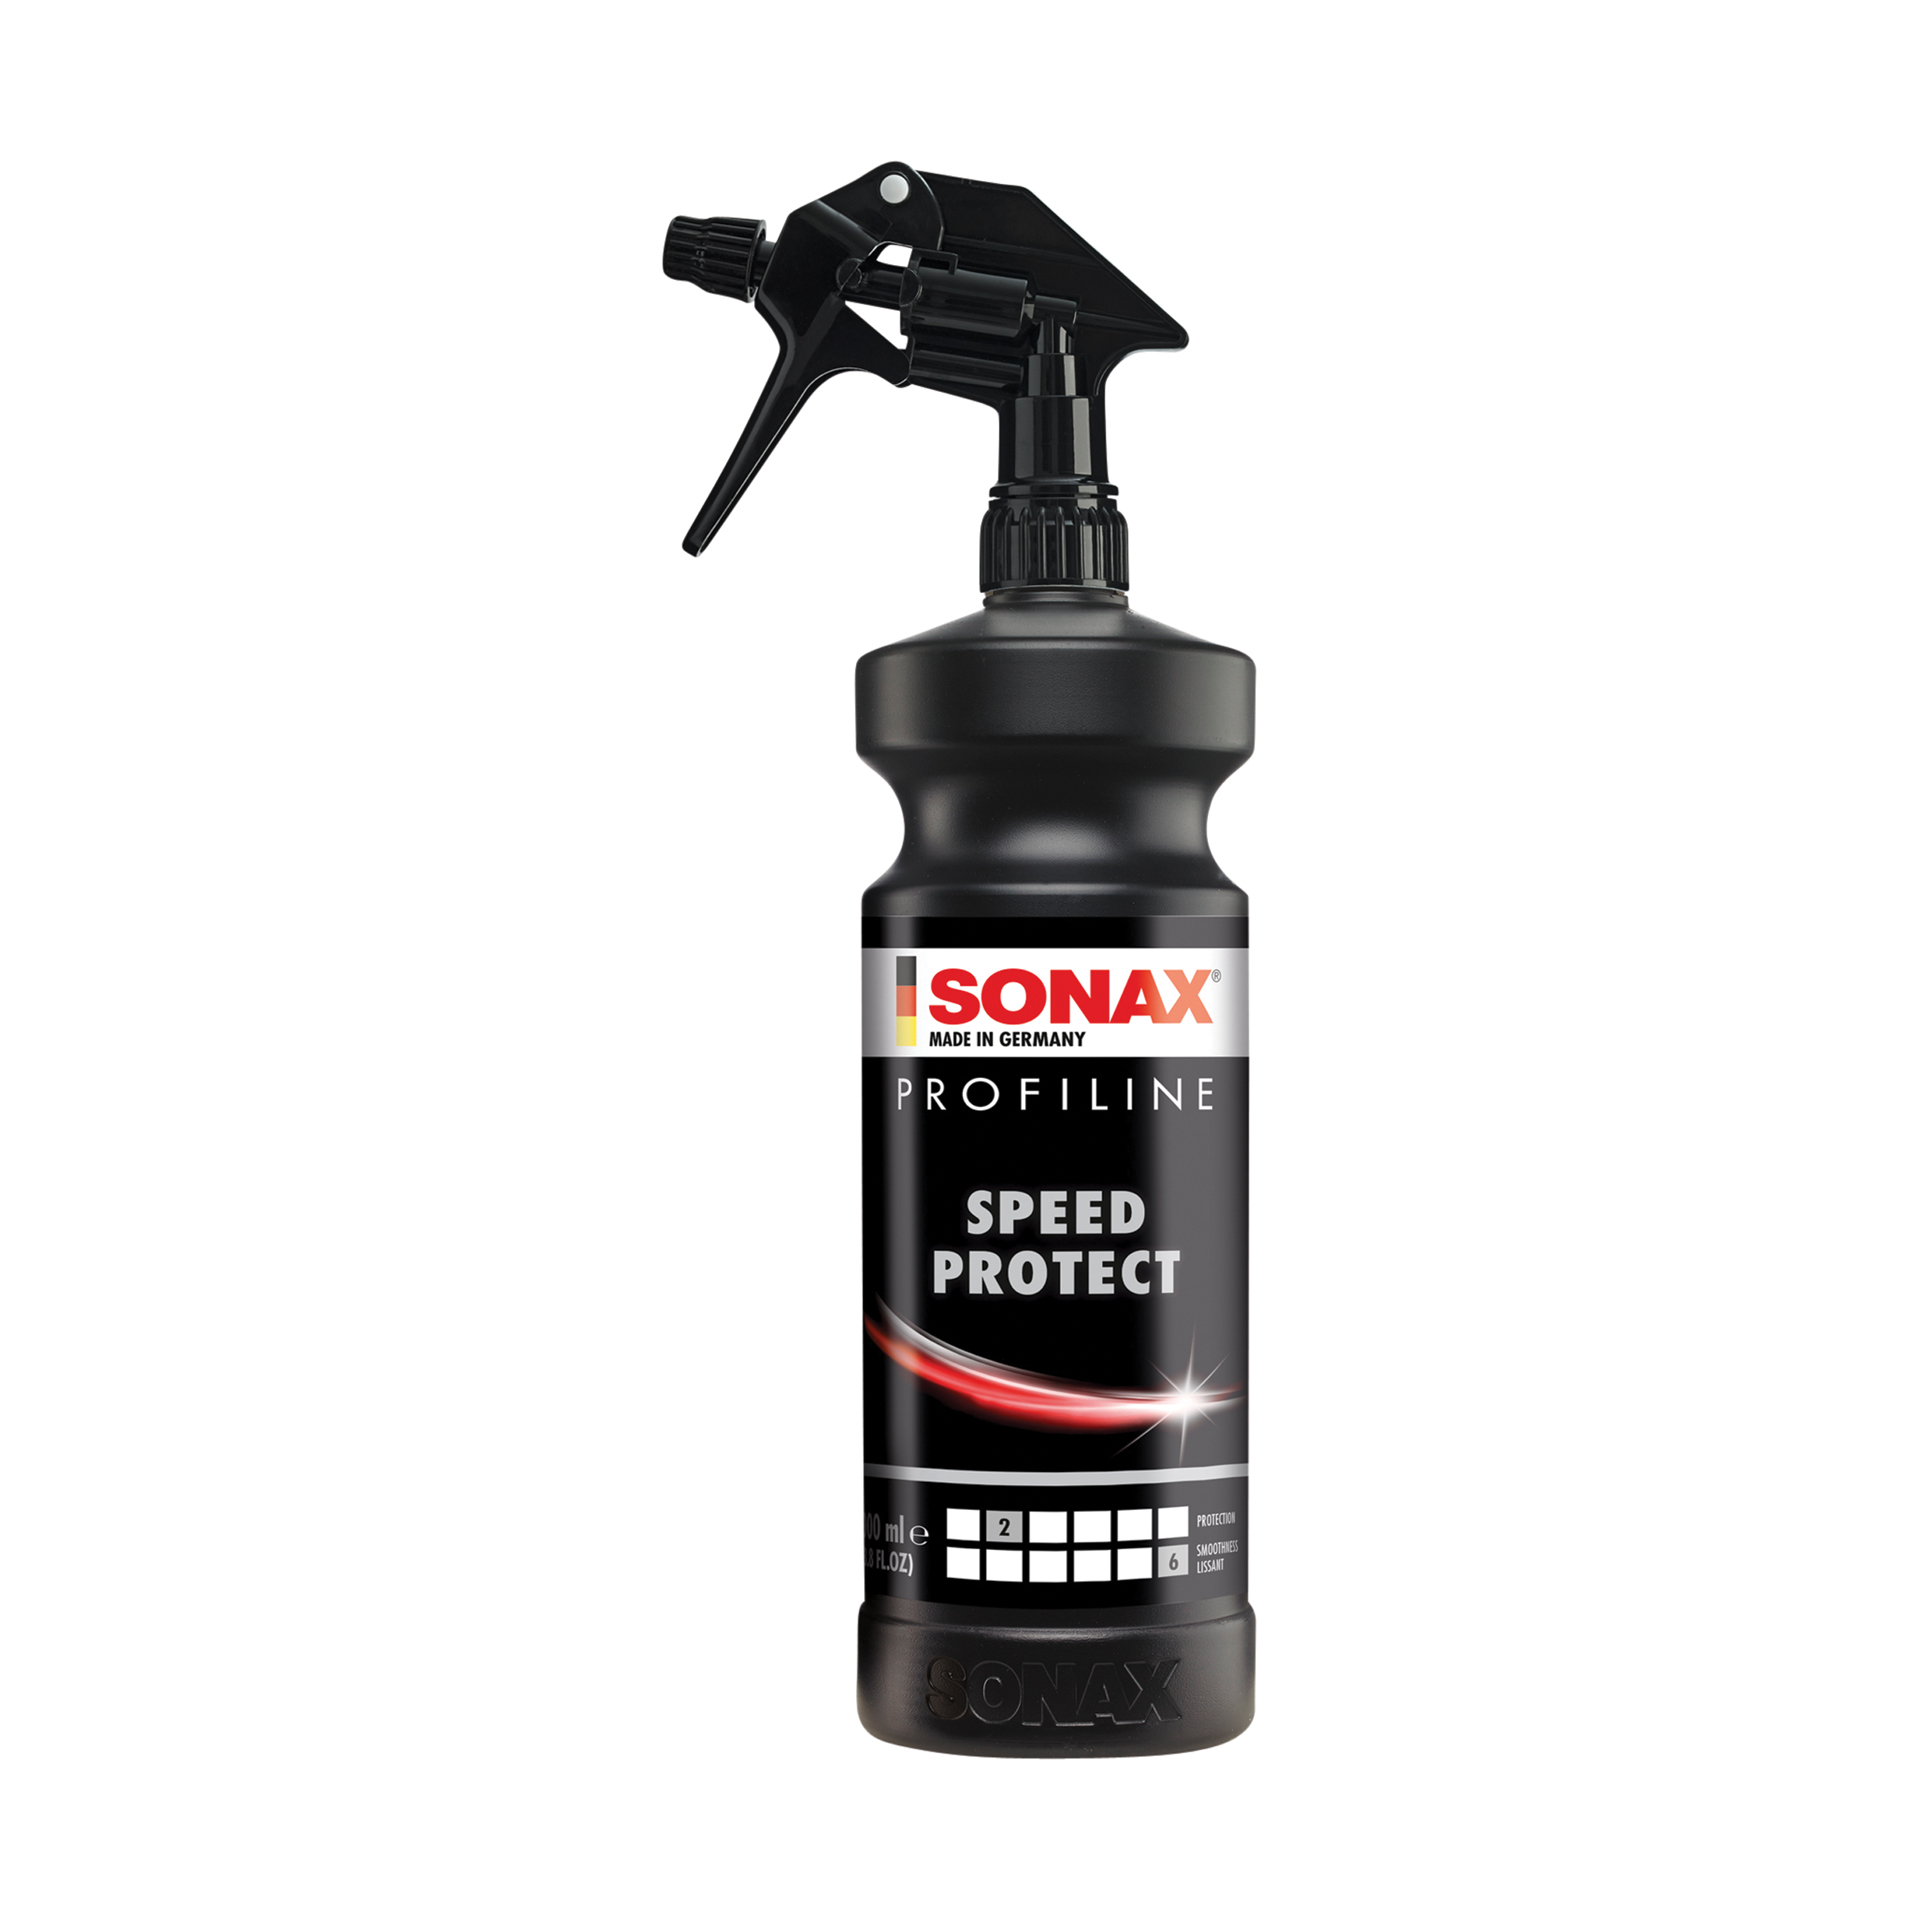 Sonax Profiline SpeedProtect 1 Liter (1837897)